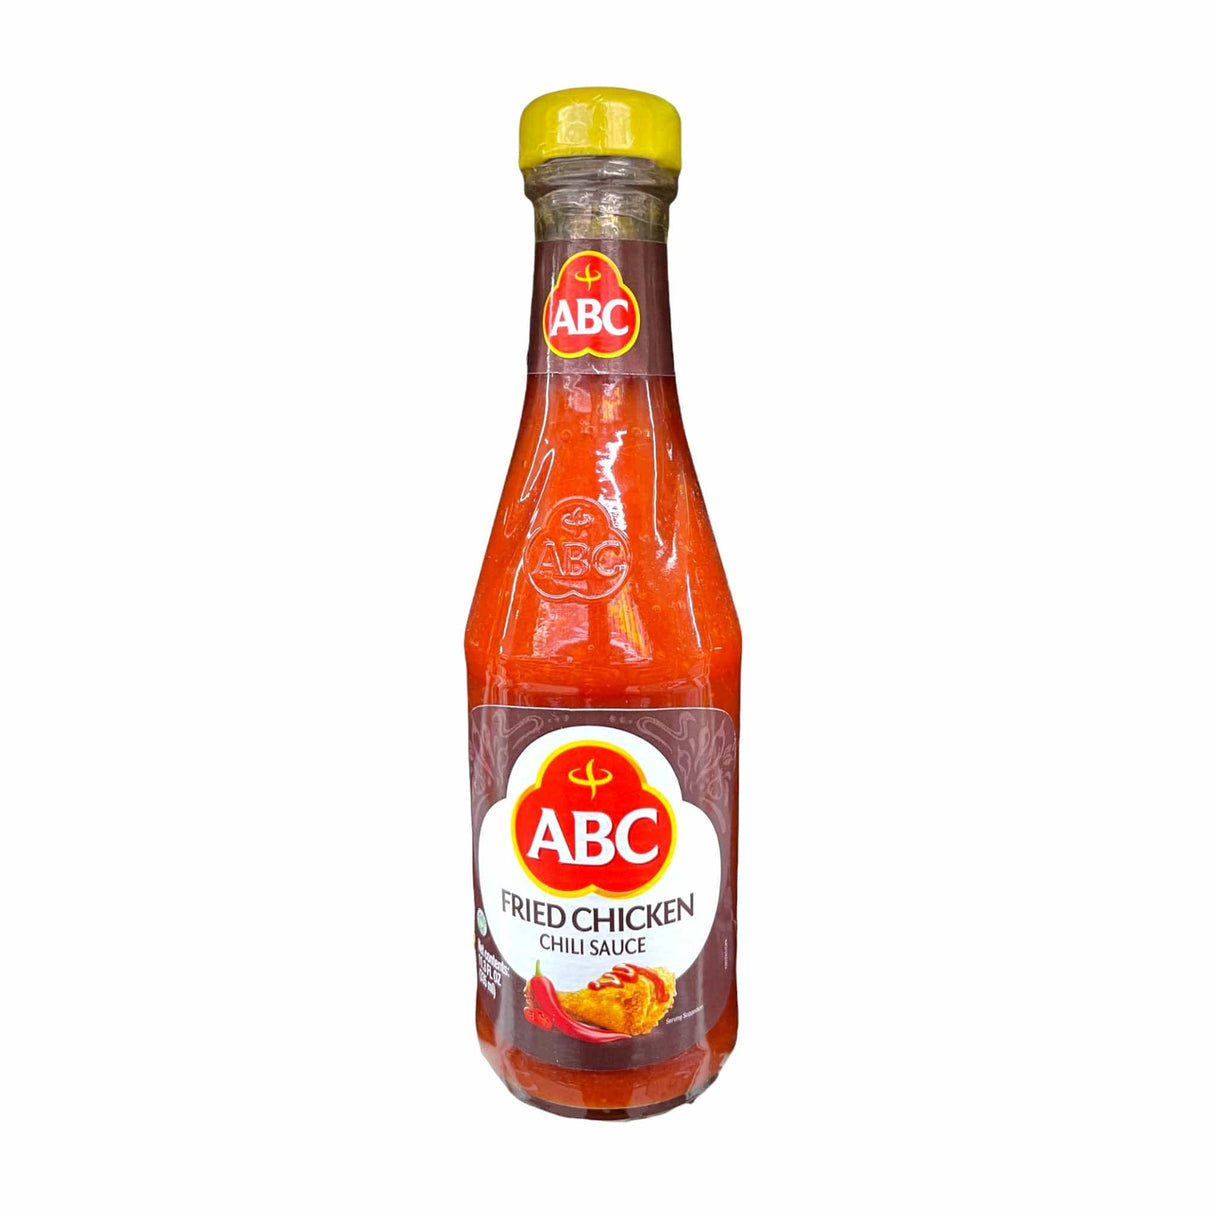 ABC Fried Chicken Chili Sauce